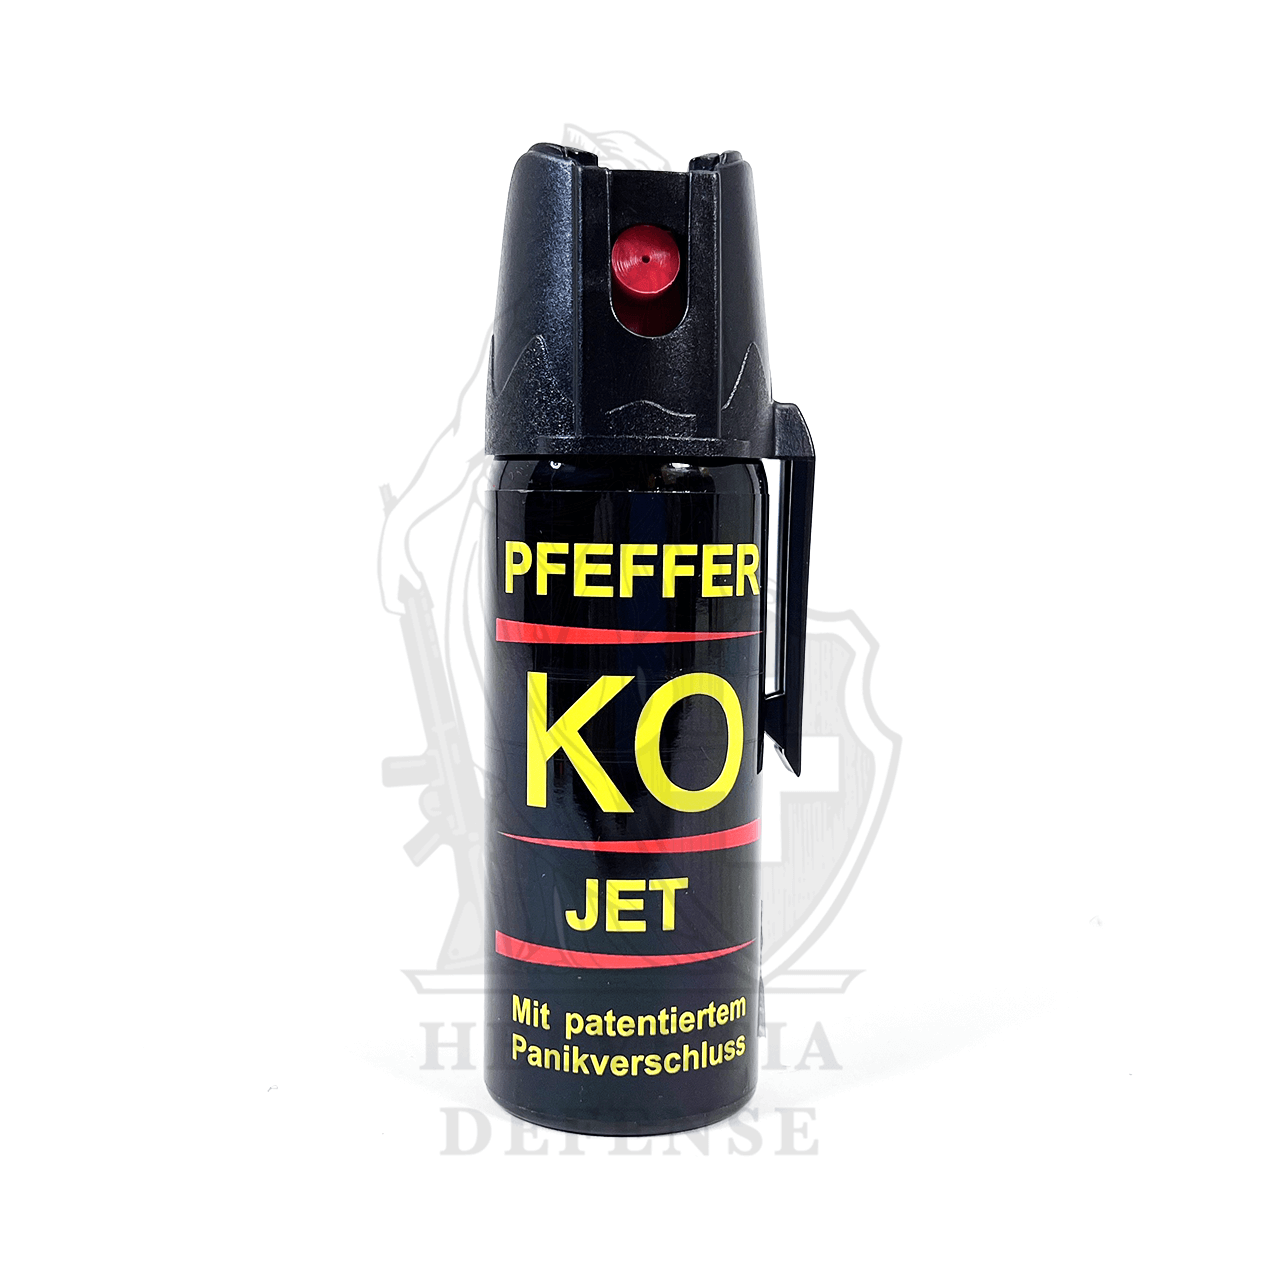 BALLISTOL KO Pepper Spray - Compact 50ml Self-Defense Misting Device